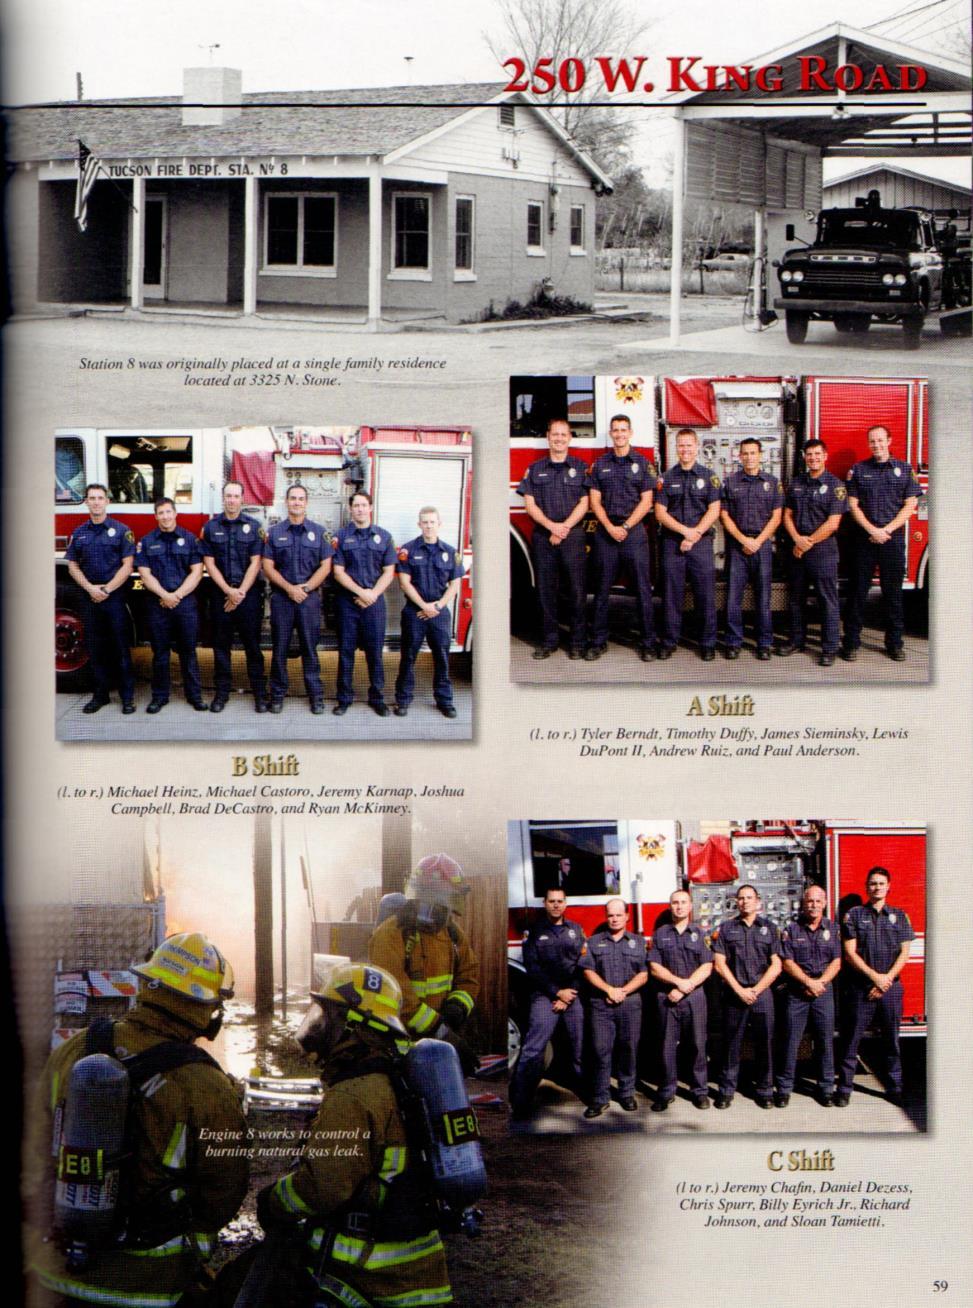 Courtesy Tucson Fire Department 2000